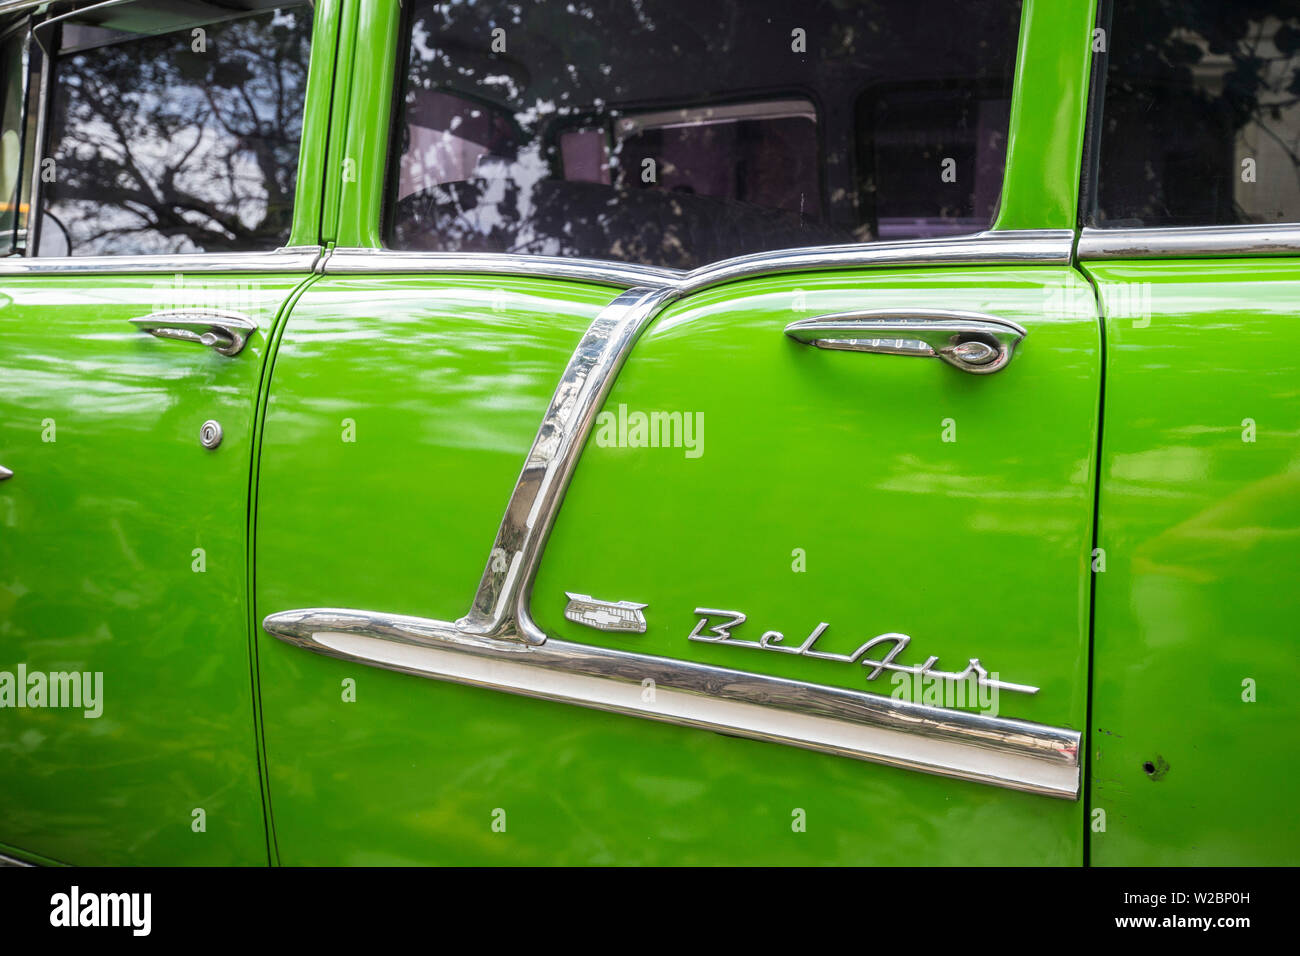 Chevrolet Belair car, Habana Vieja, Havana, Cuba Stock Photo